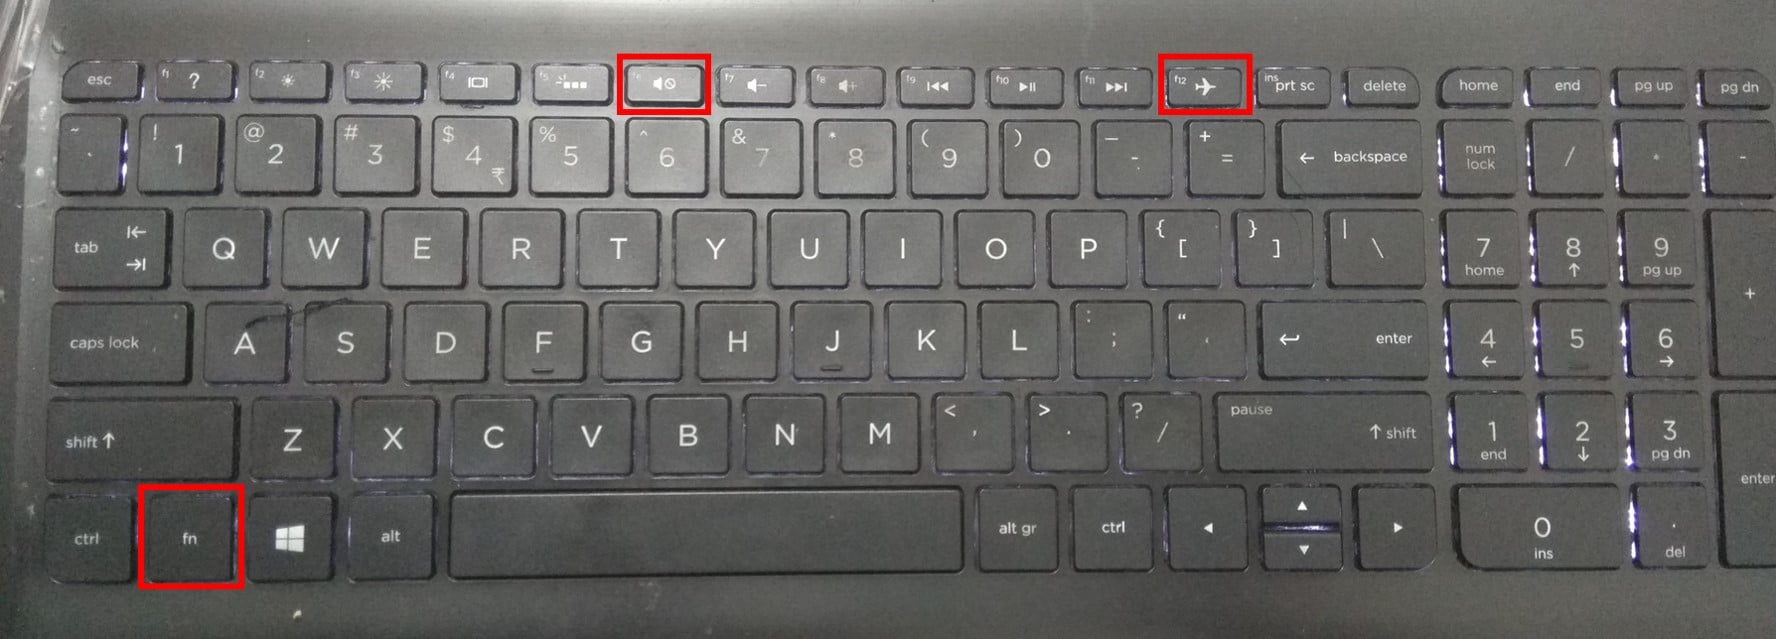 toshiba laptop flip function keys